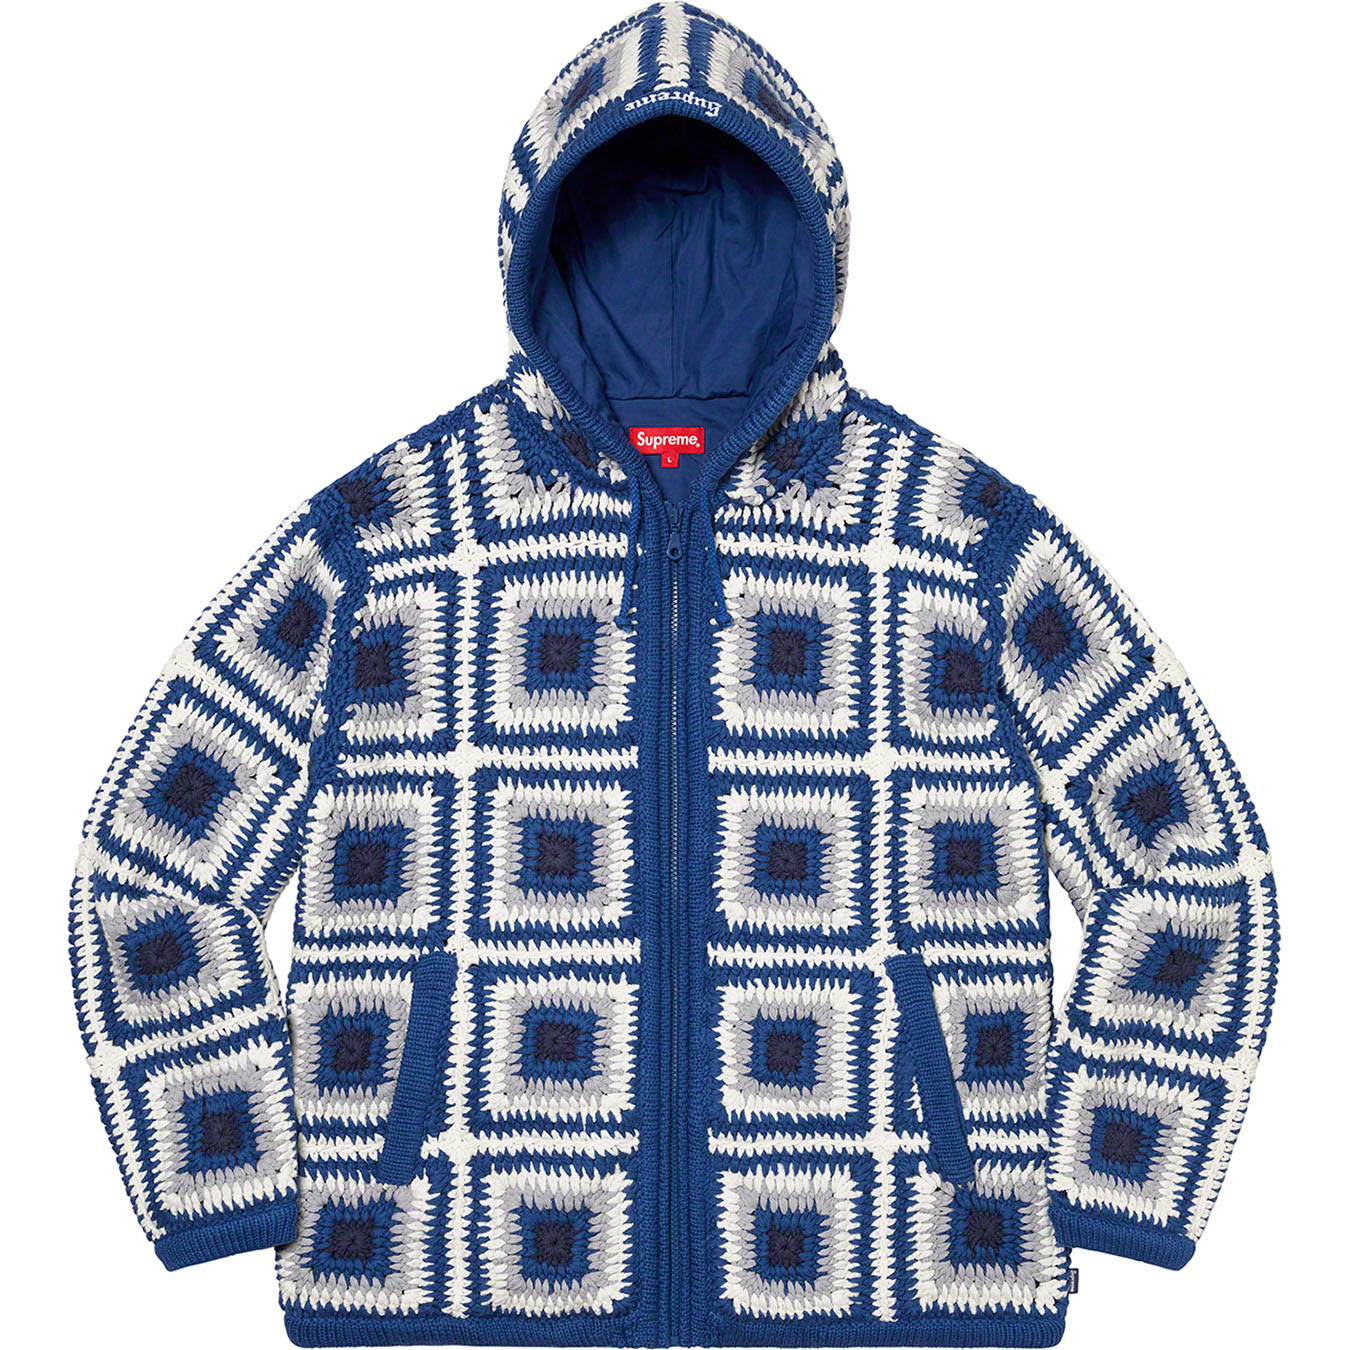 Supreme Crochet Hooded Zip Up Sweater